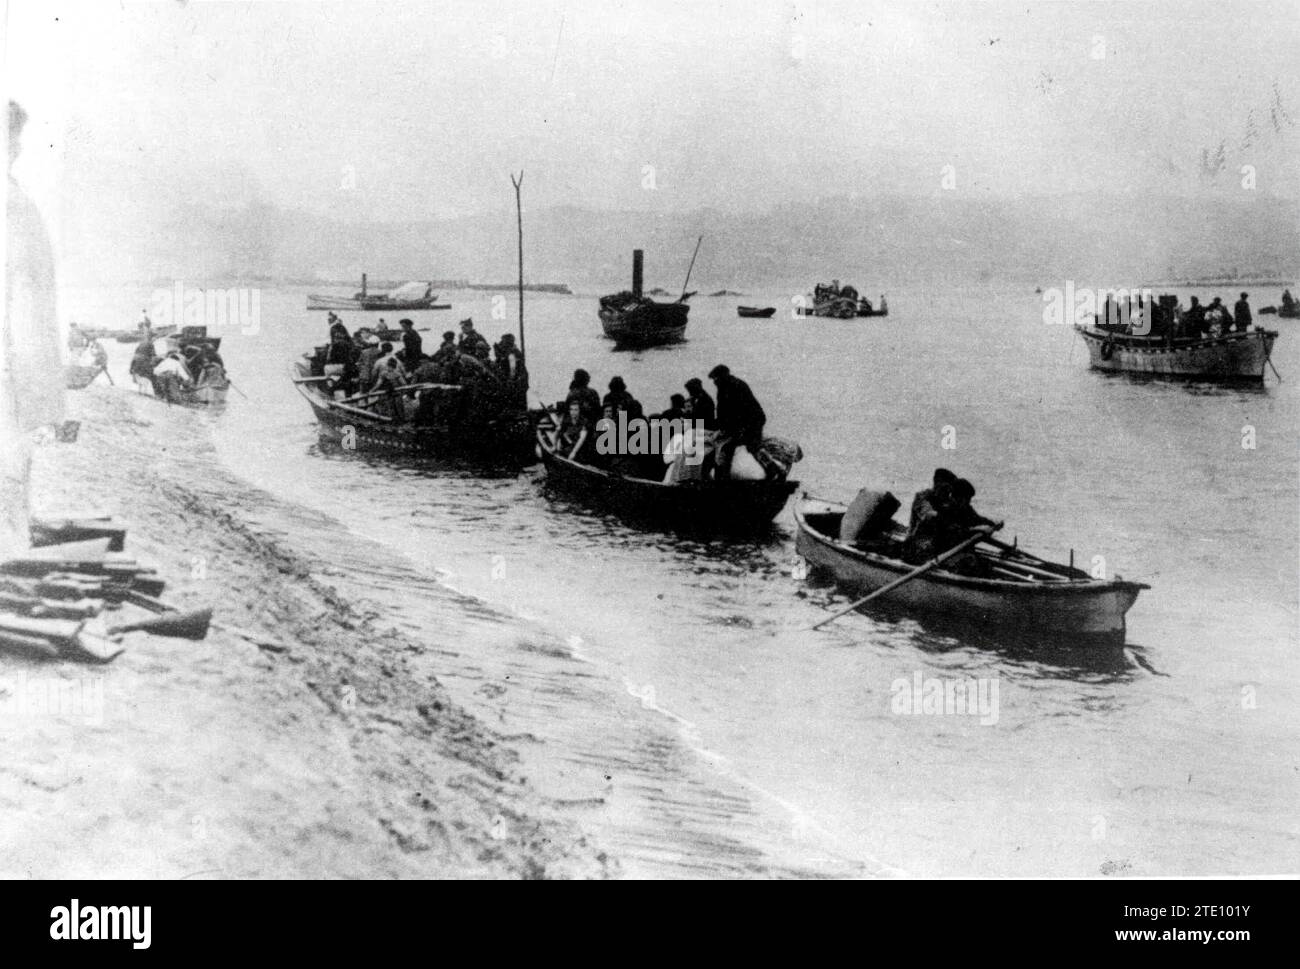 Hondarribia, año 1939. Barcos pesqueros llenos de refugiados españoles republicanos que huyen del país. Crédito: Álbum / Archivo ABC Foto de stock